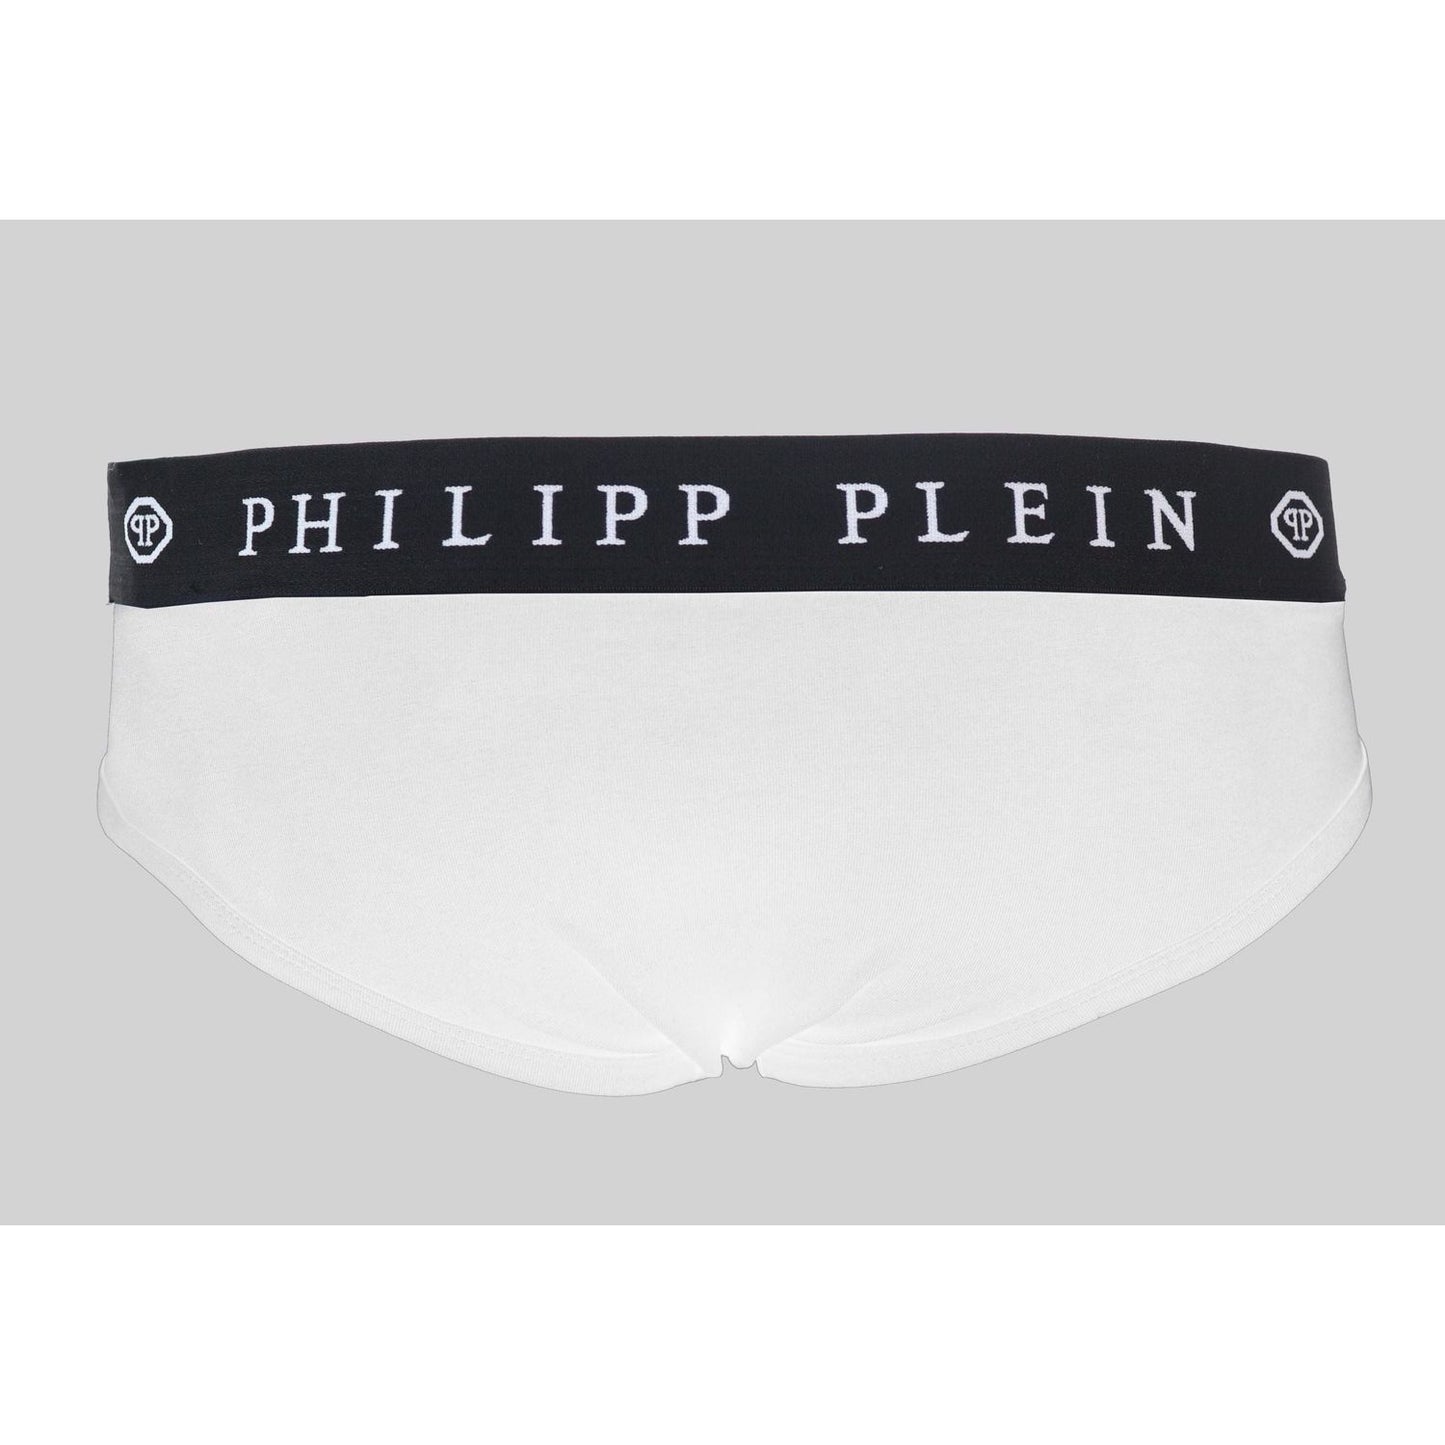 Philipp Plein Elevated White Boxer Shorts Twin-Pack slipbipack-bianco-philipp-plein-underwear product-6416-742622951-1-scaled-0a189124-e62.jpg